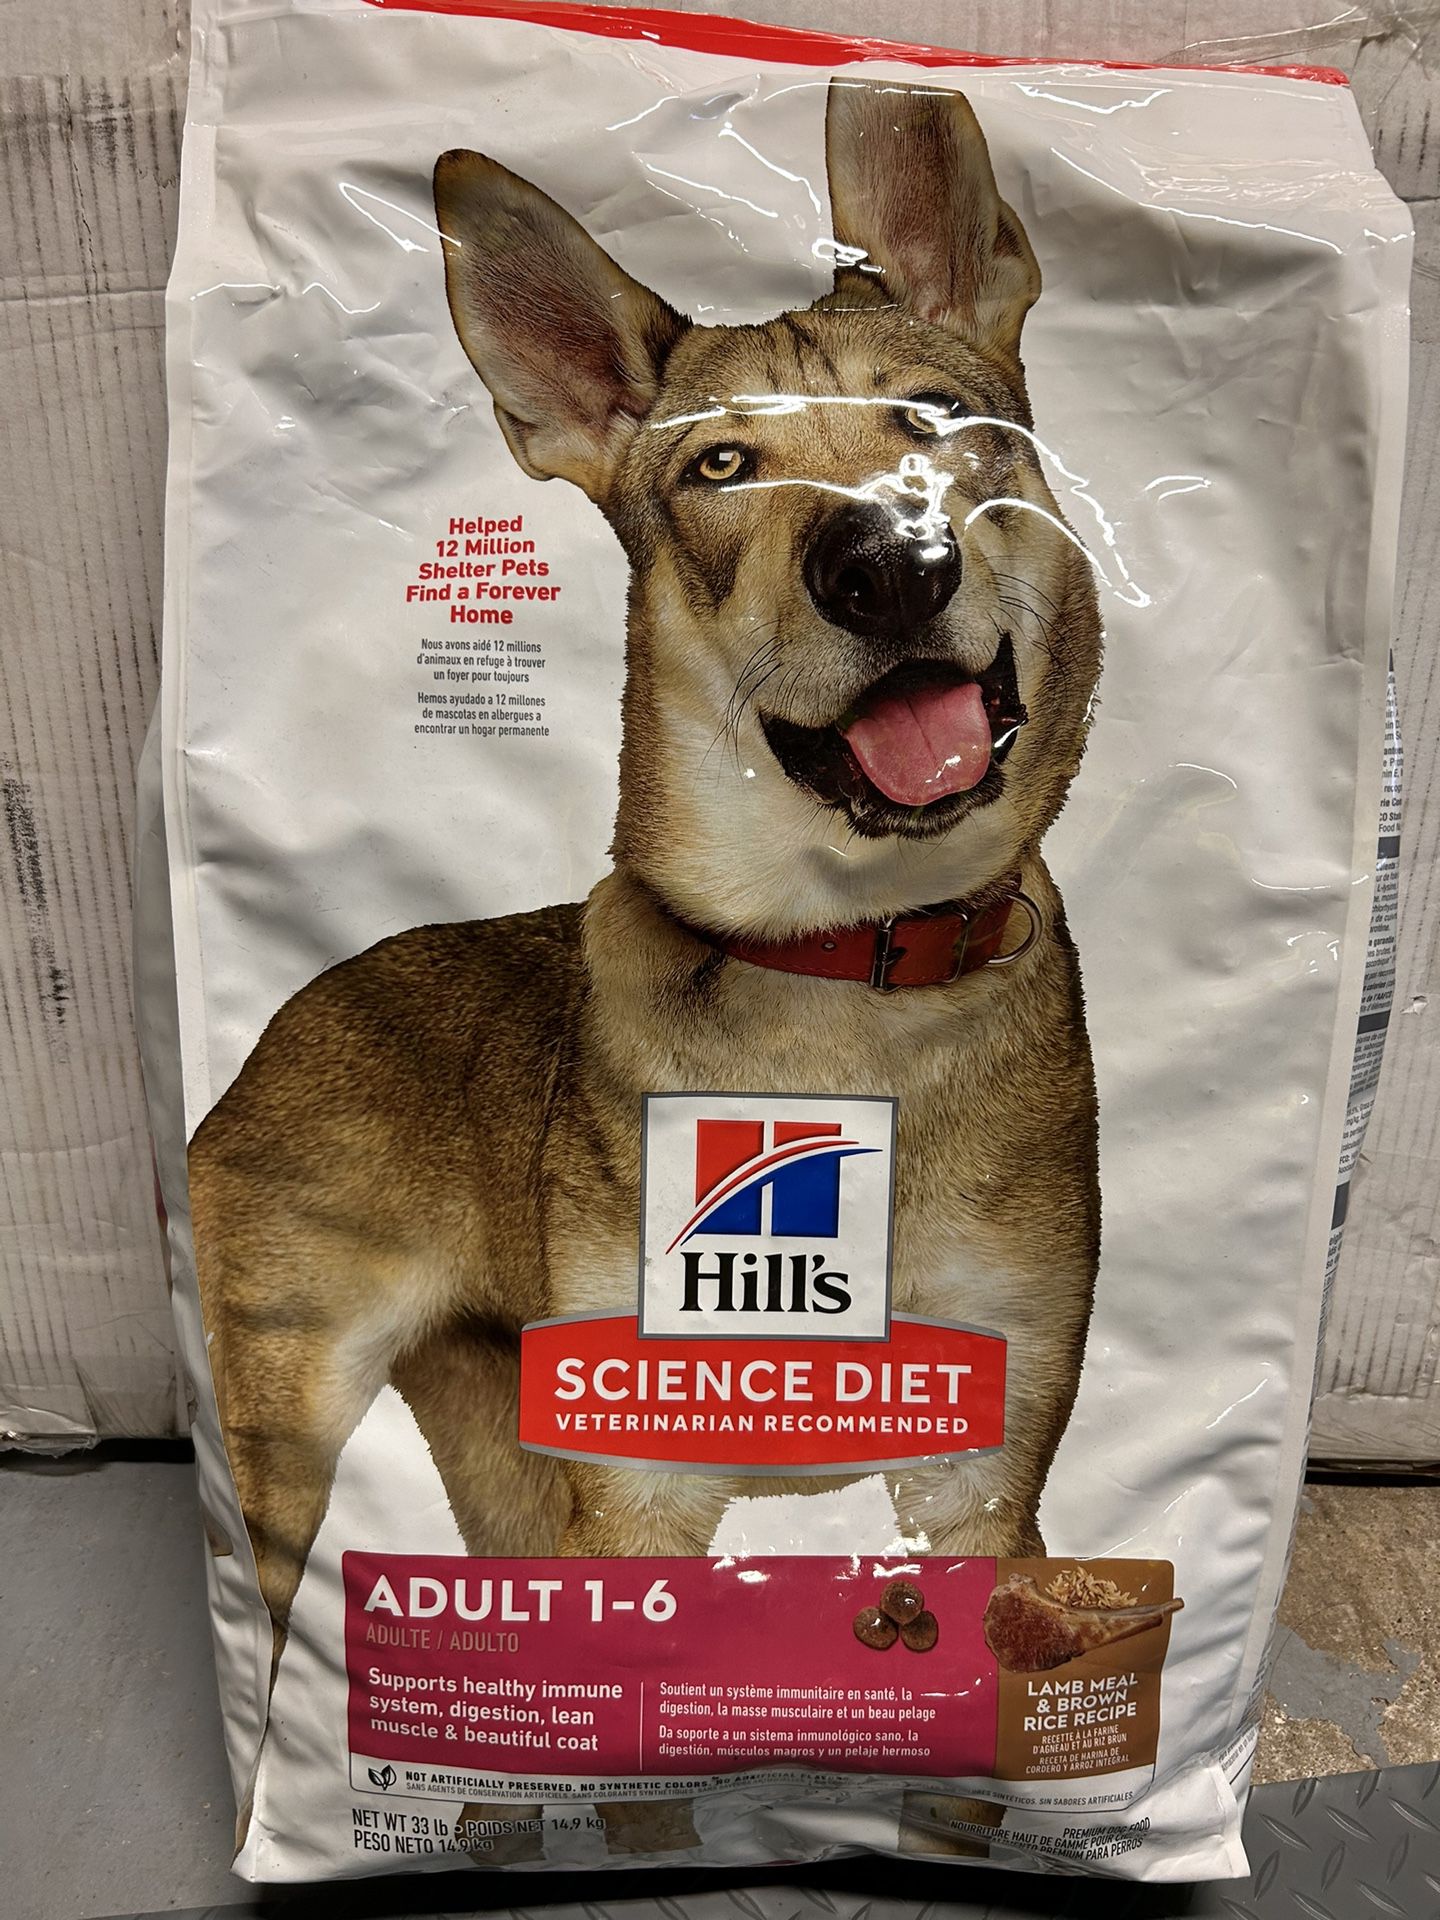 Science diet Dog Food Bag